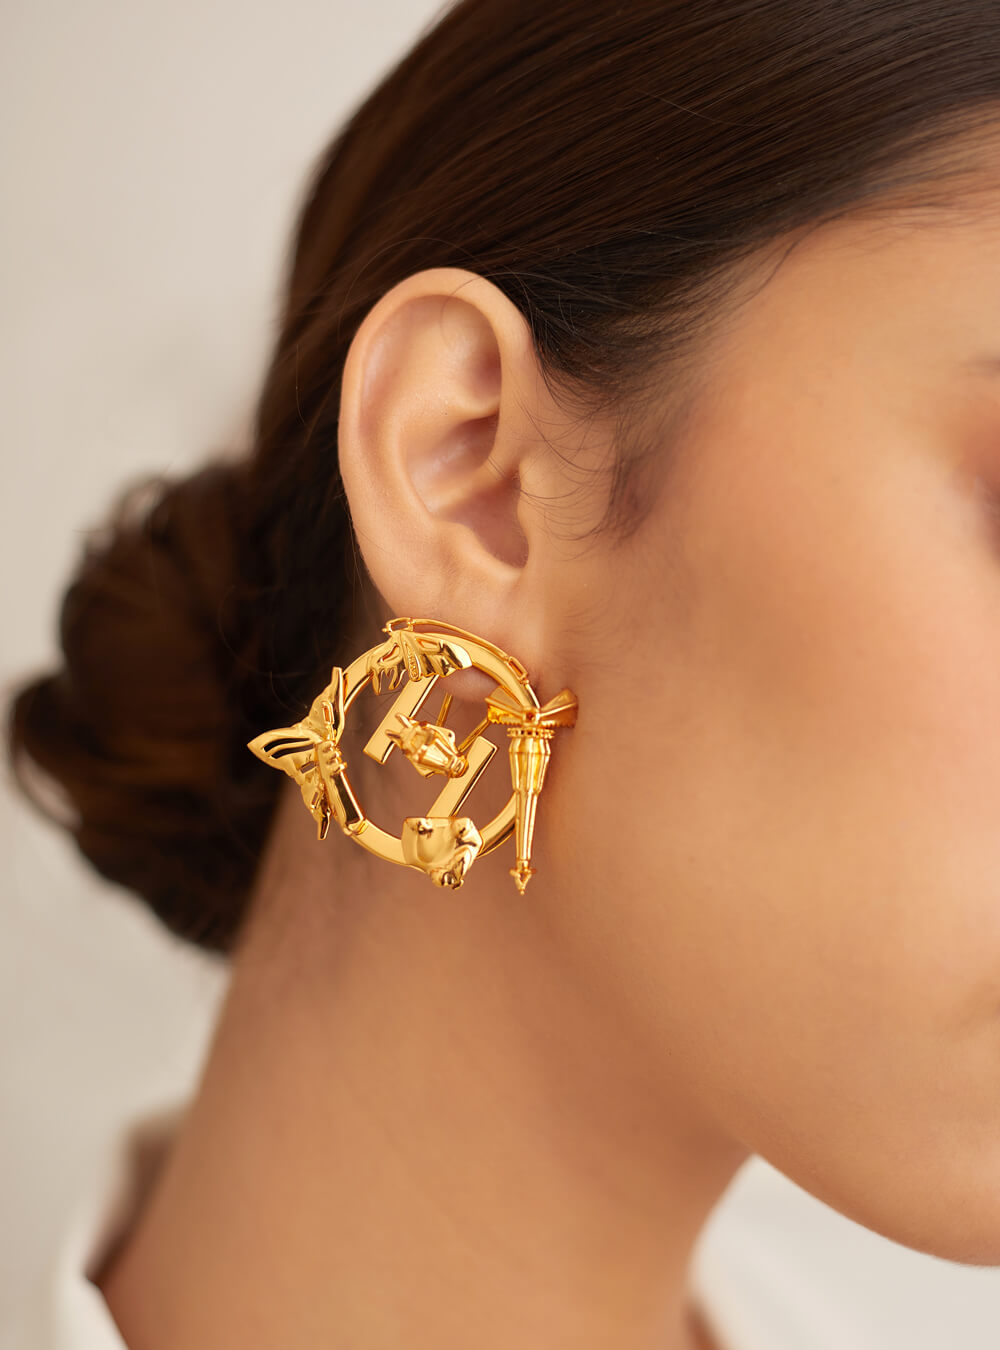 Cancer XL earrings